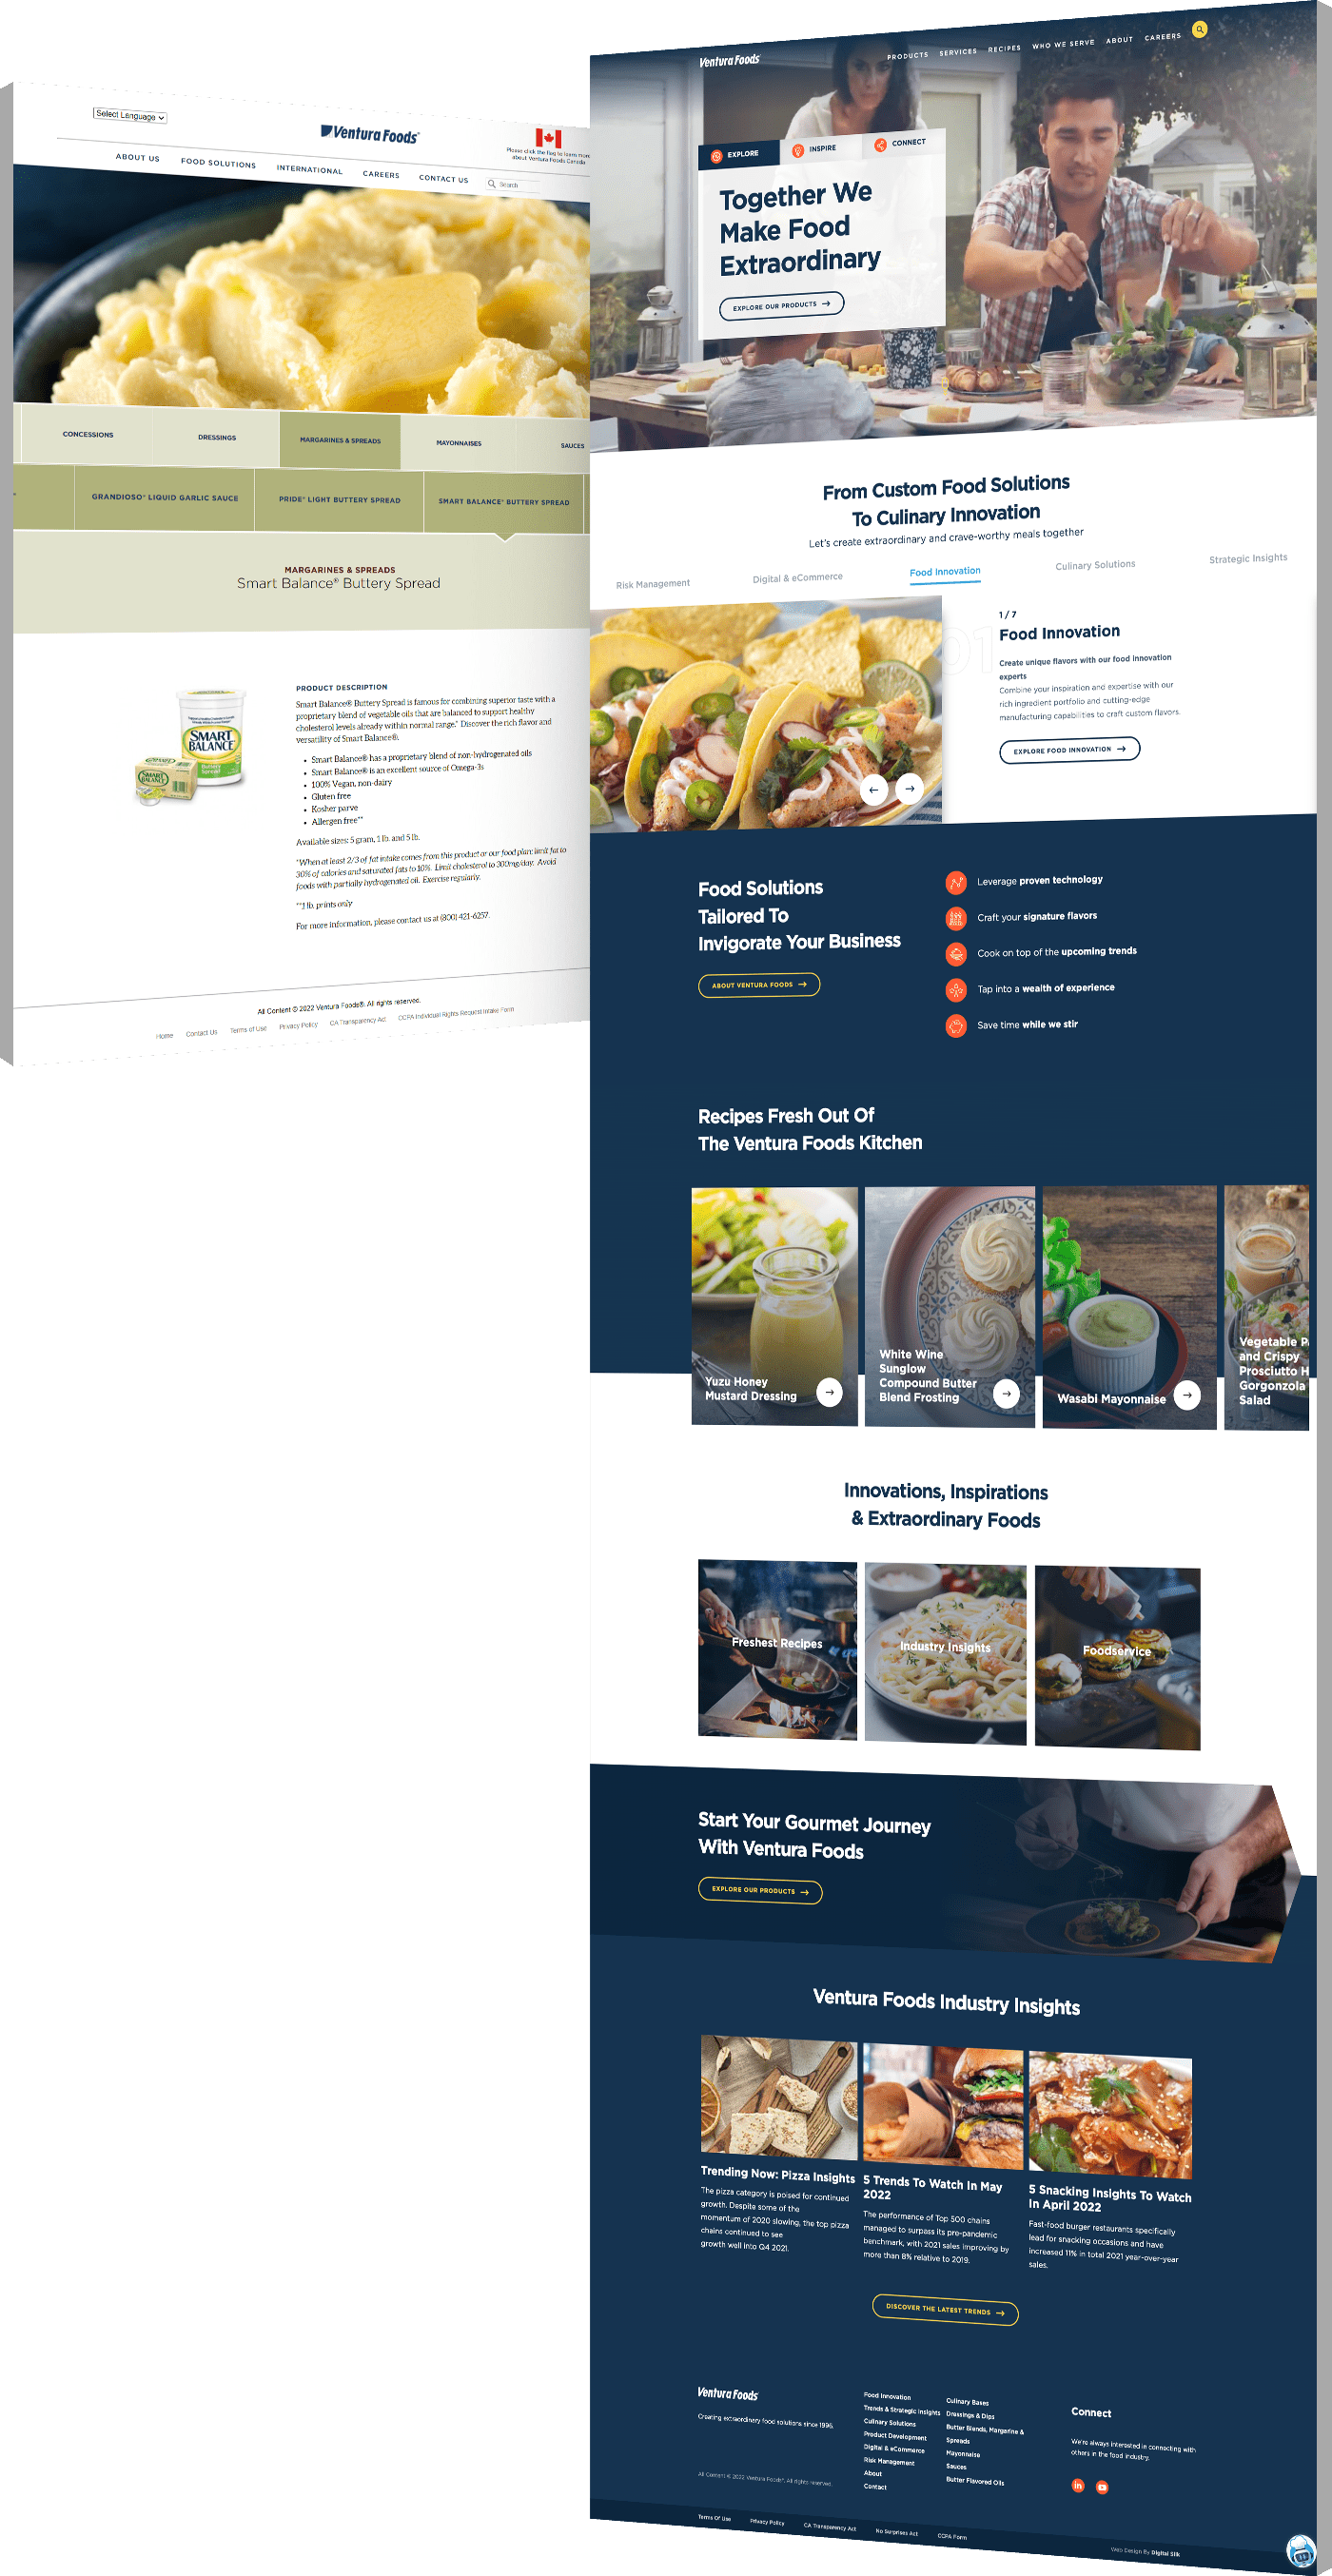 Ventura Foods - website design comparison - before and after redesign